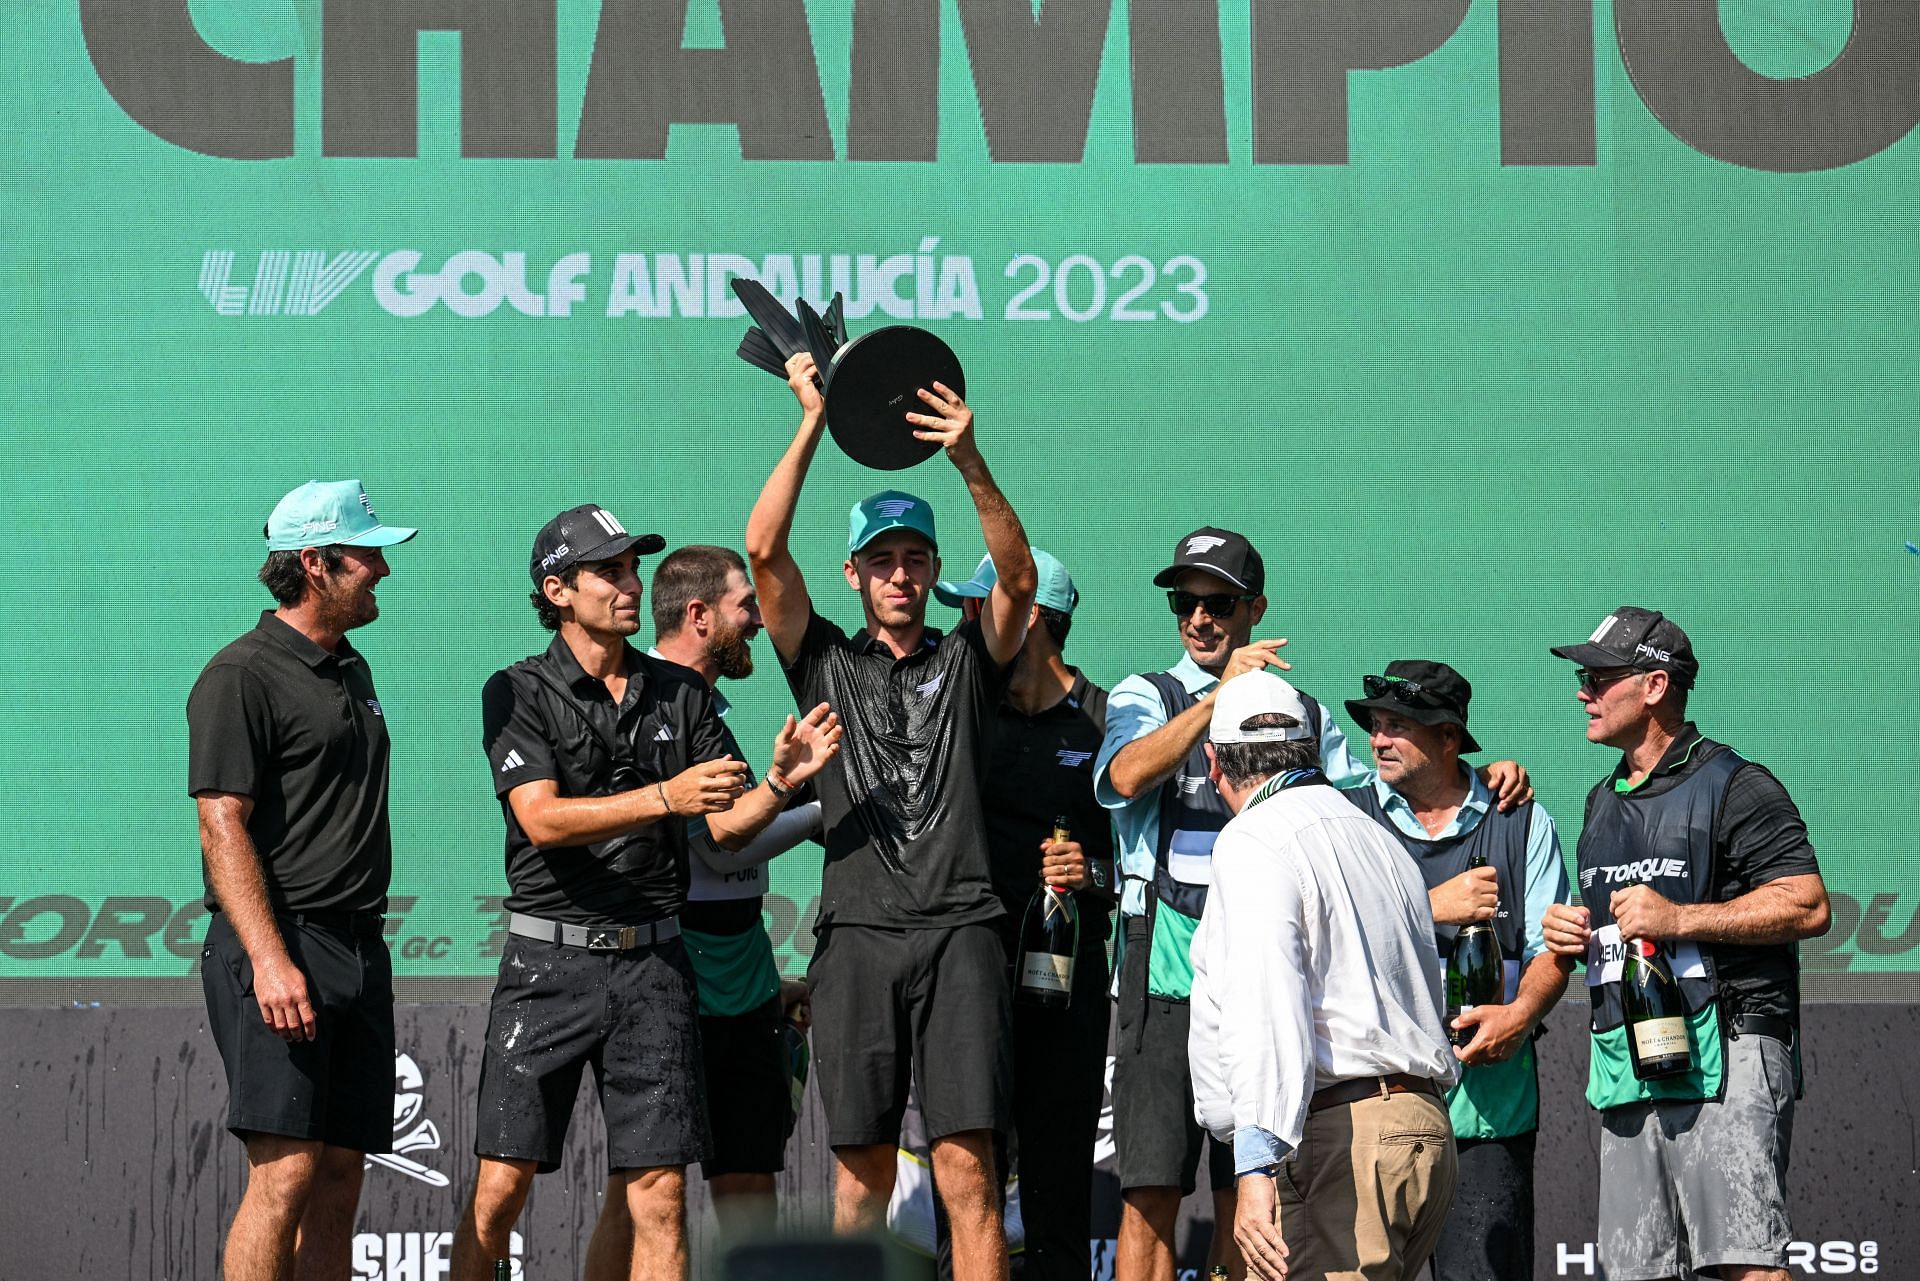 Torque GC team won the LIV Golf Andalucia (via Getty Images)